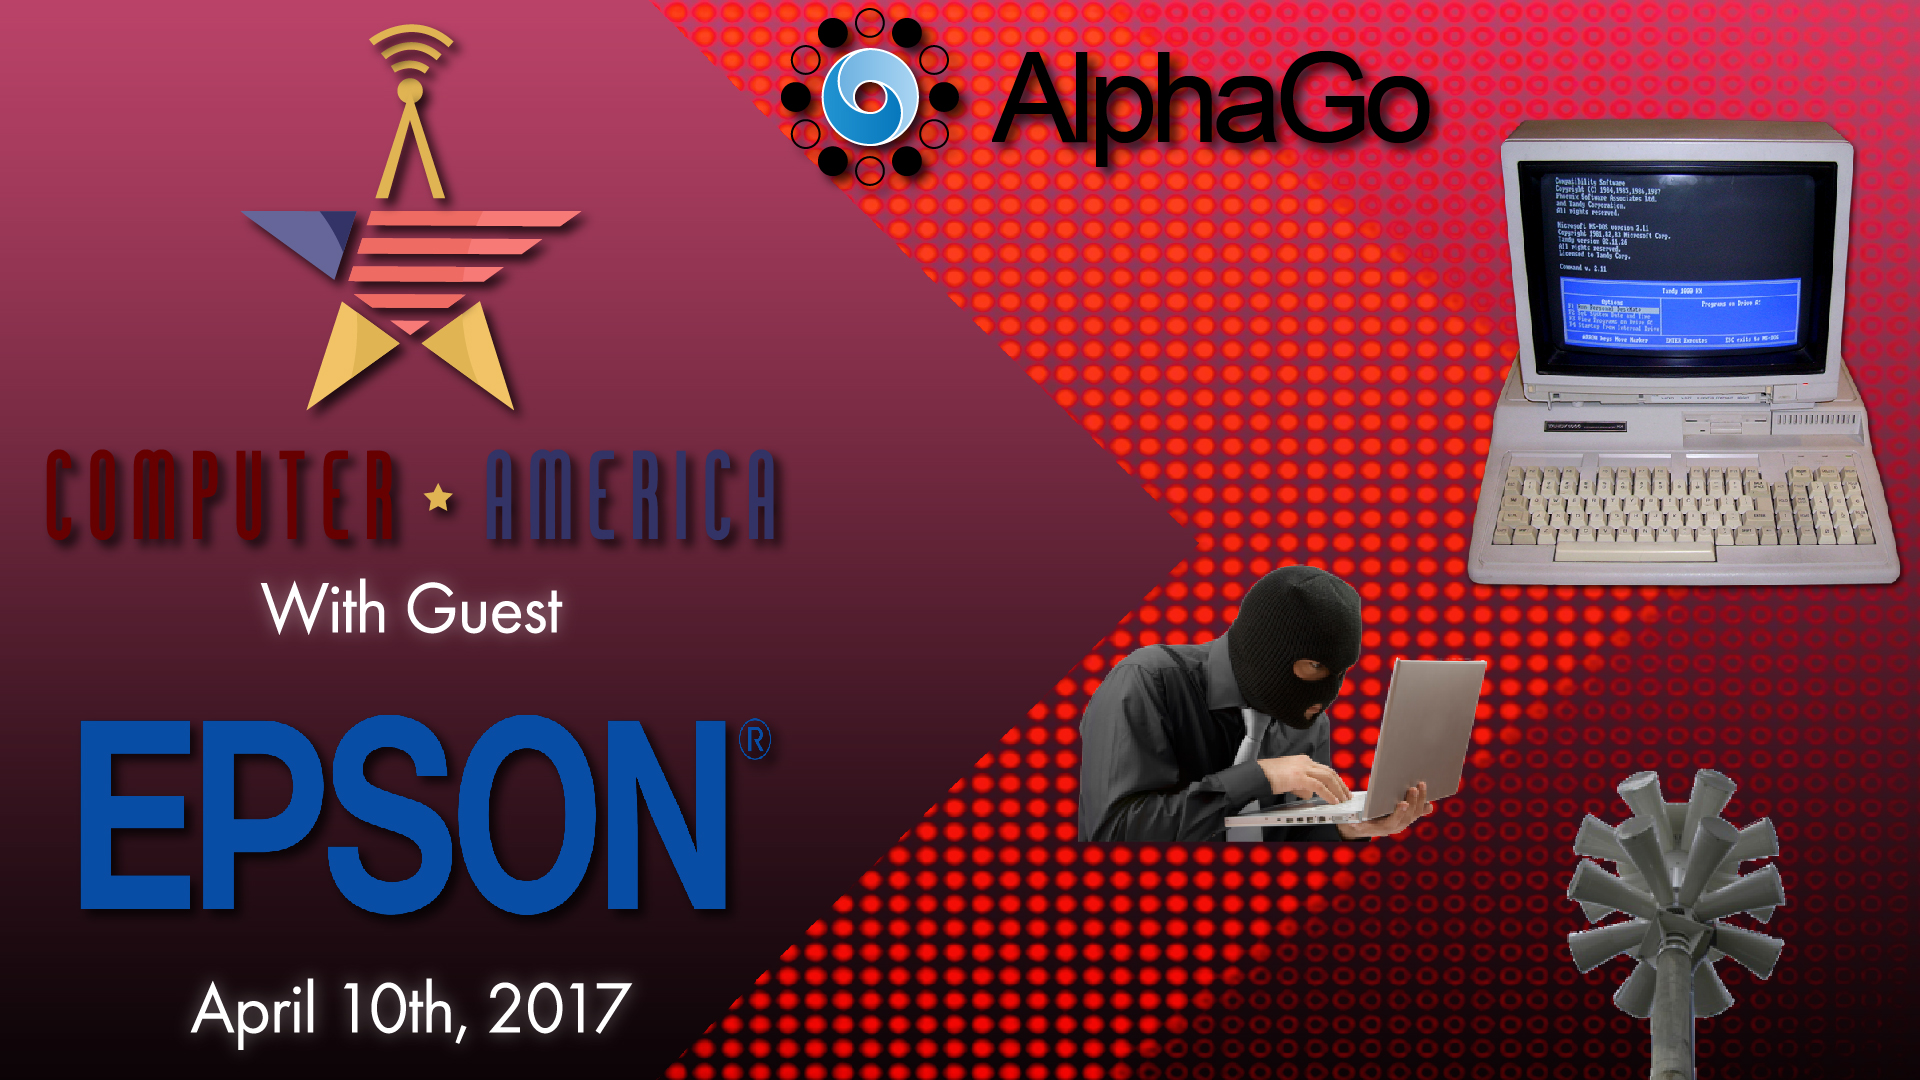 Epson America Talks Workforce, Dallas Sirens Hacked, Aging Banking, Here We AlphaGo-Again